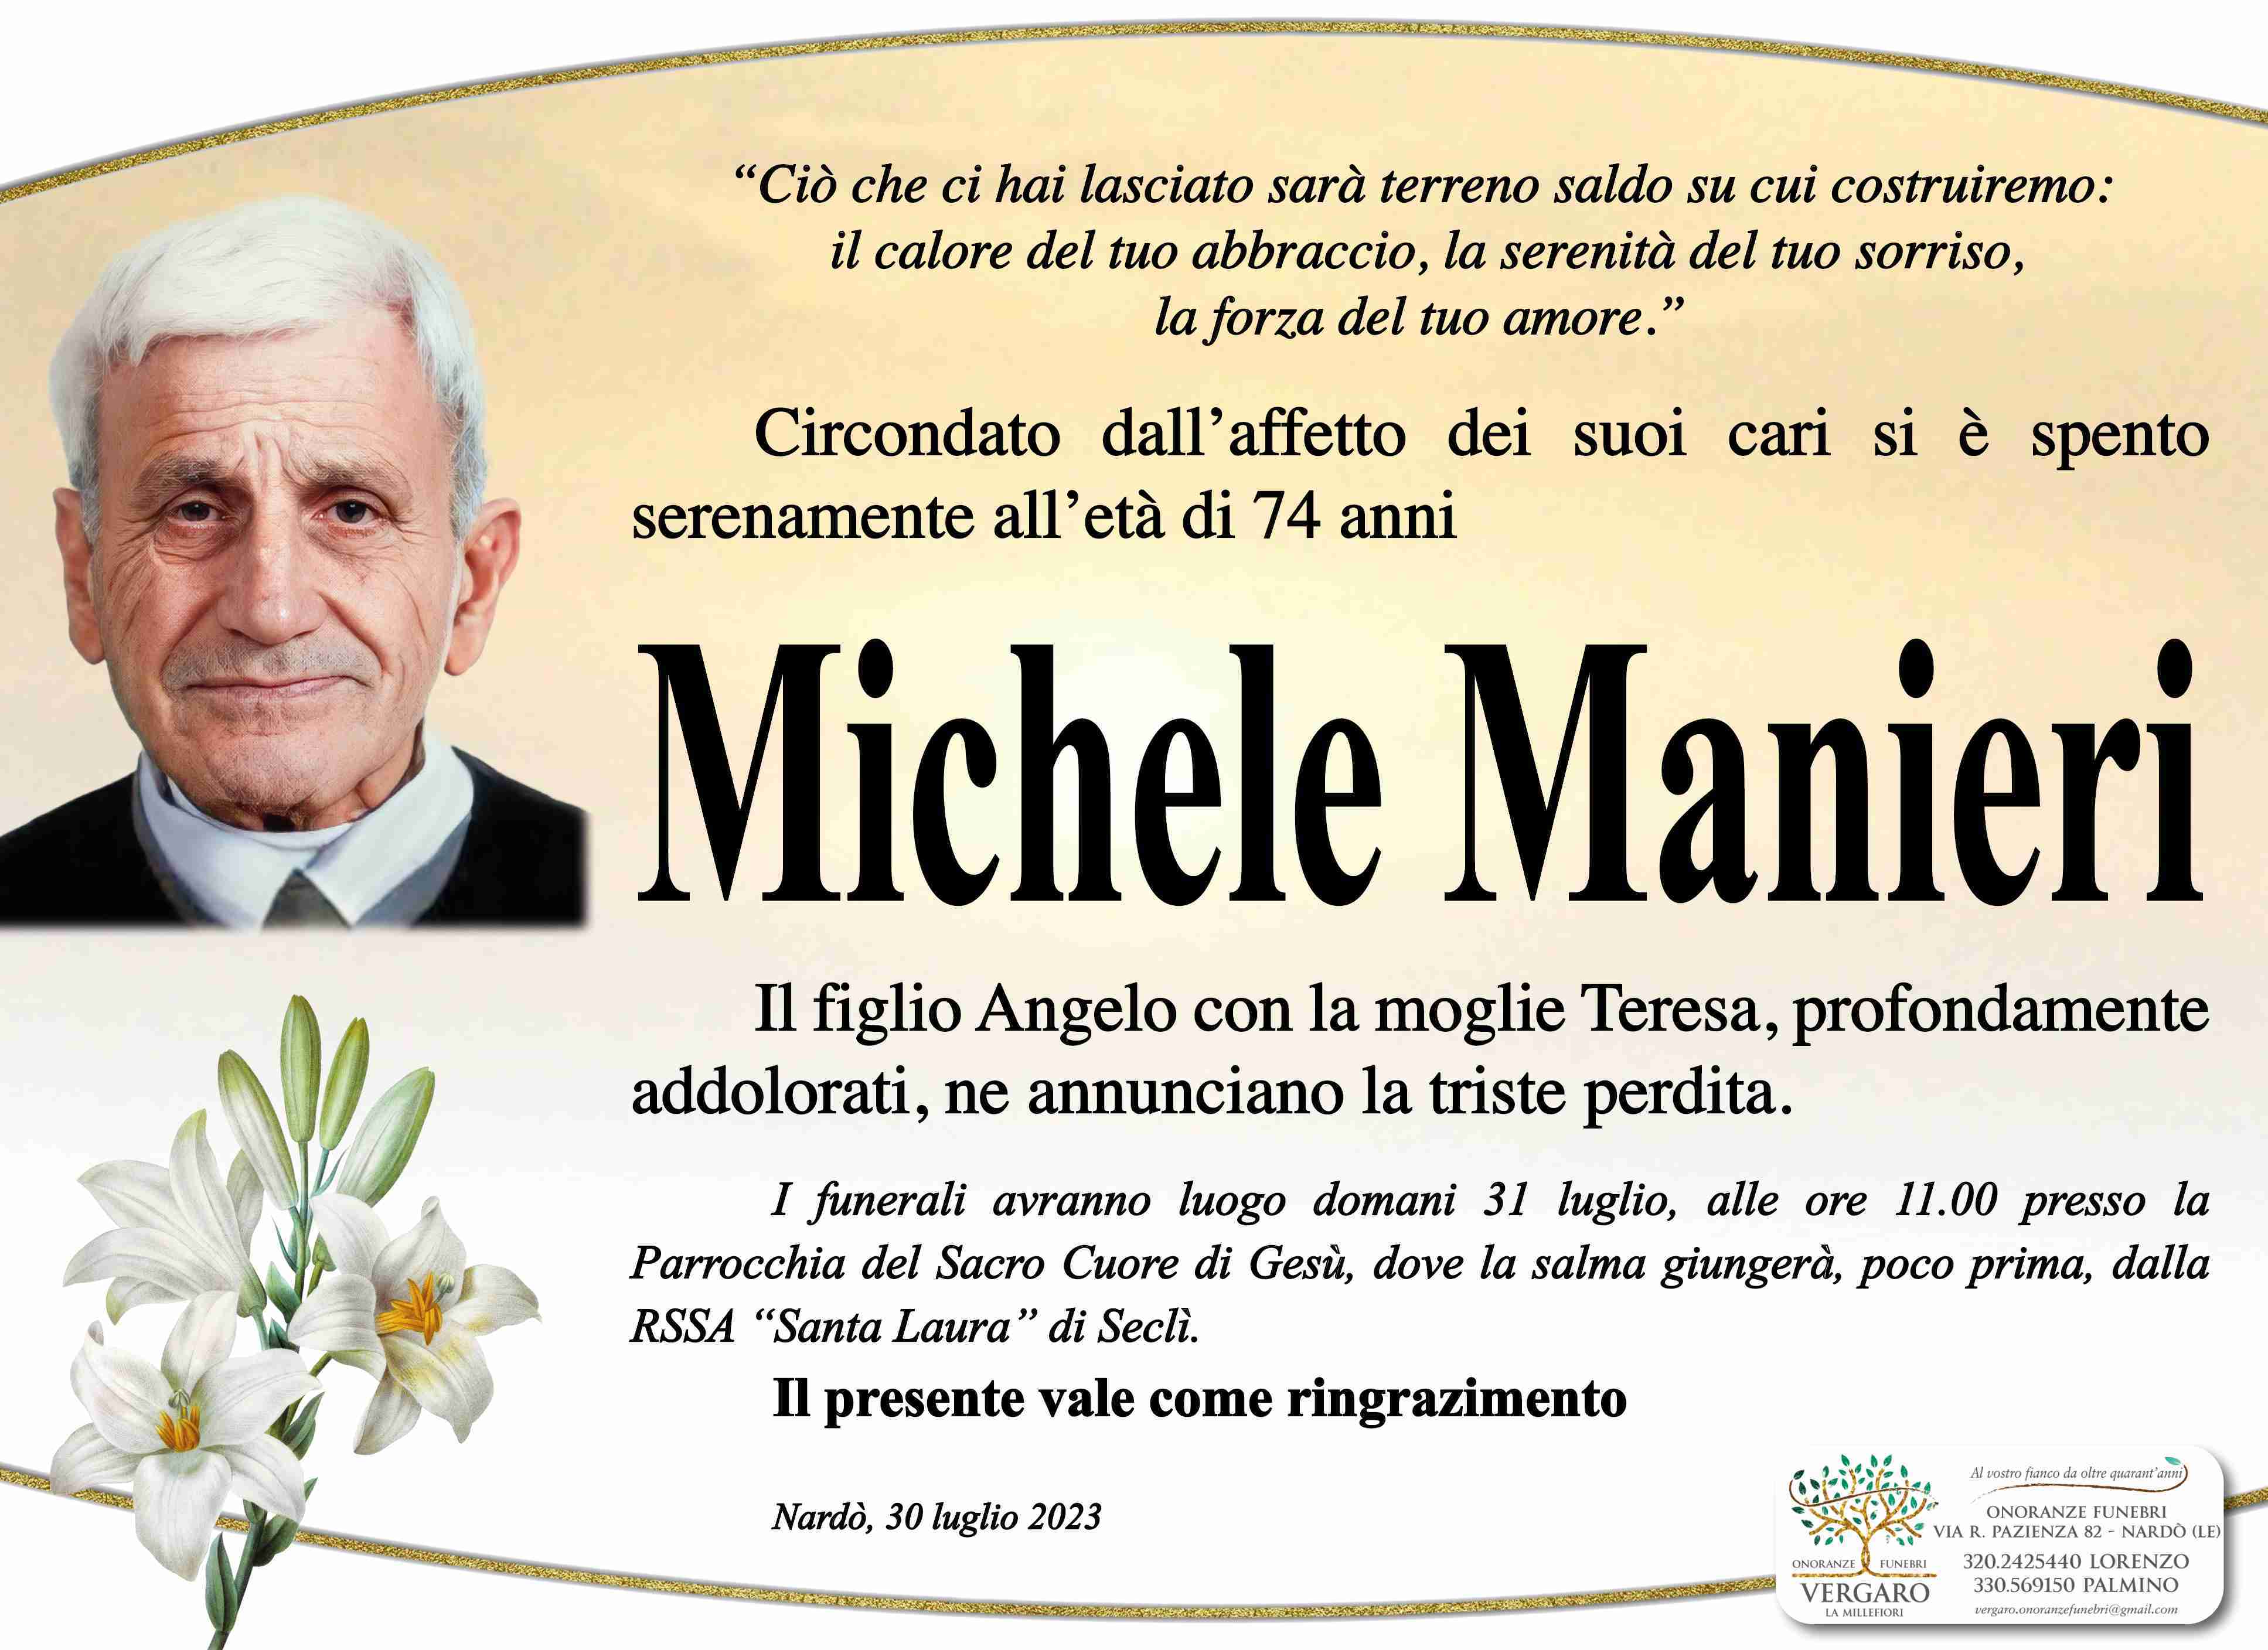 Michele Manieri